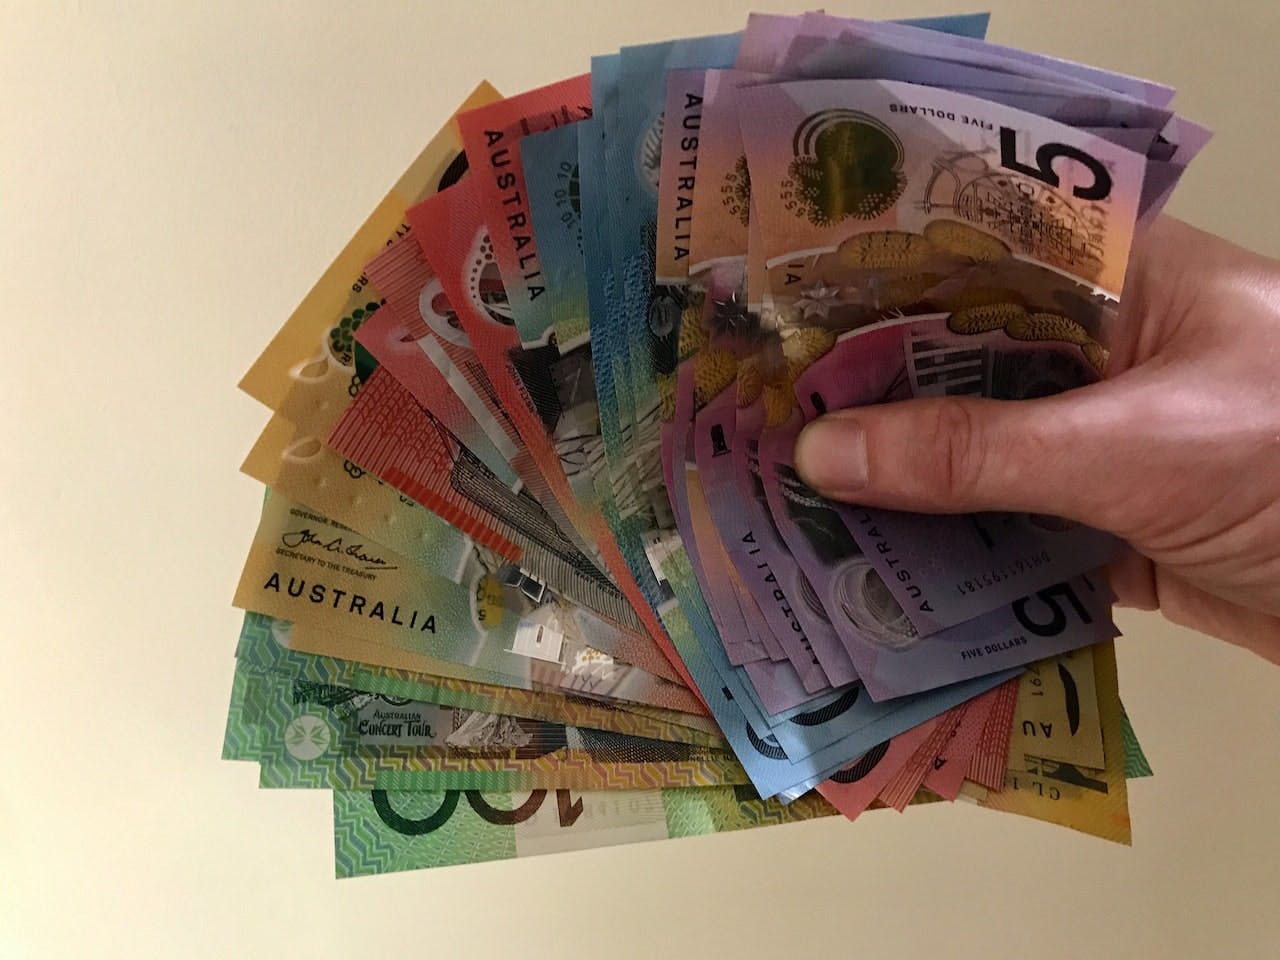 Hand holding Australian money